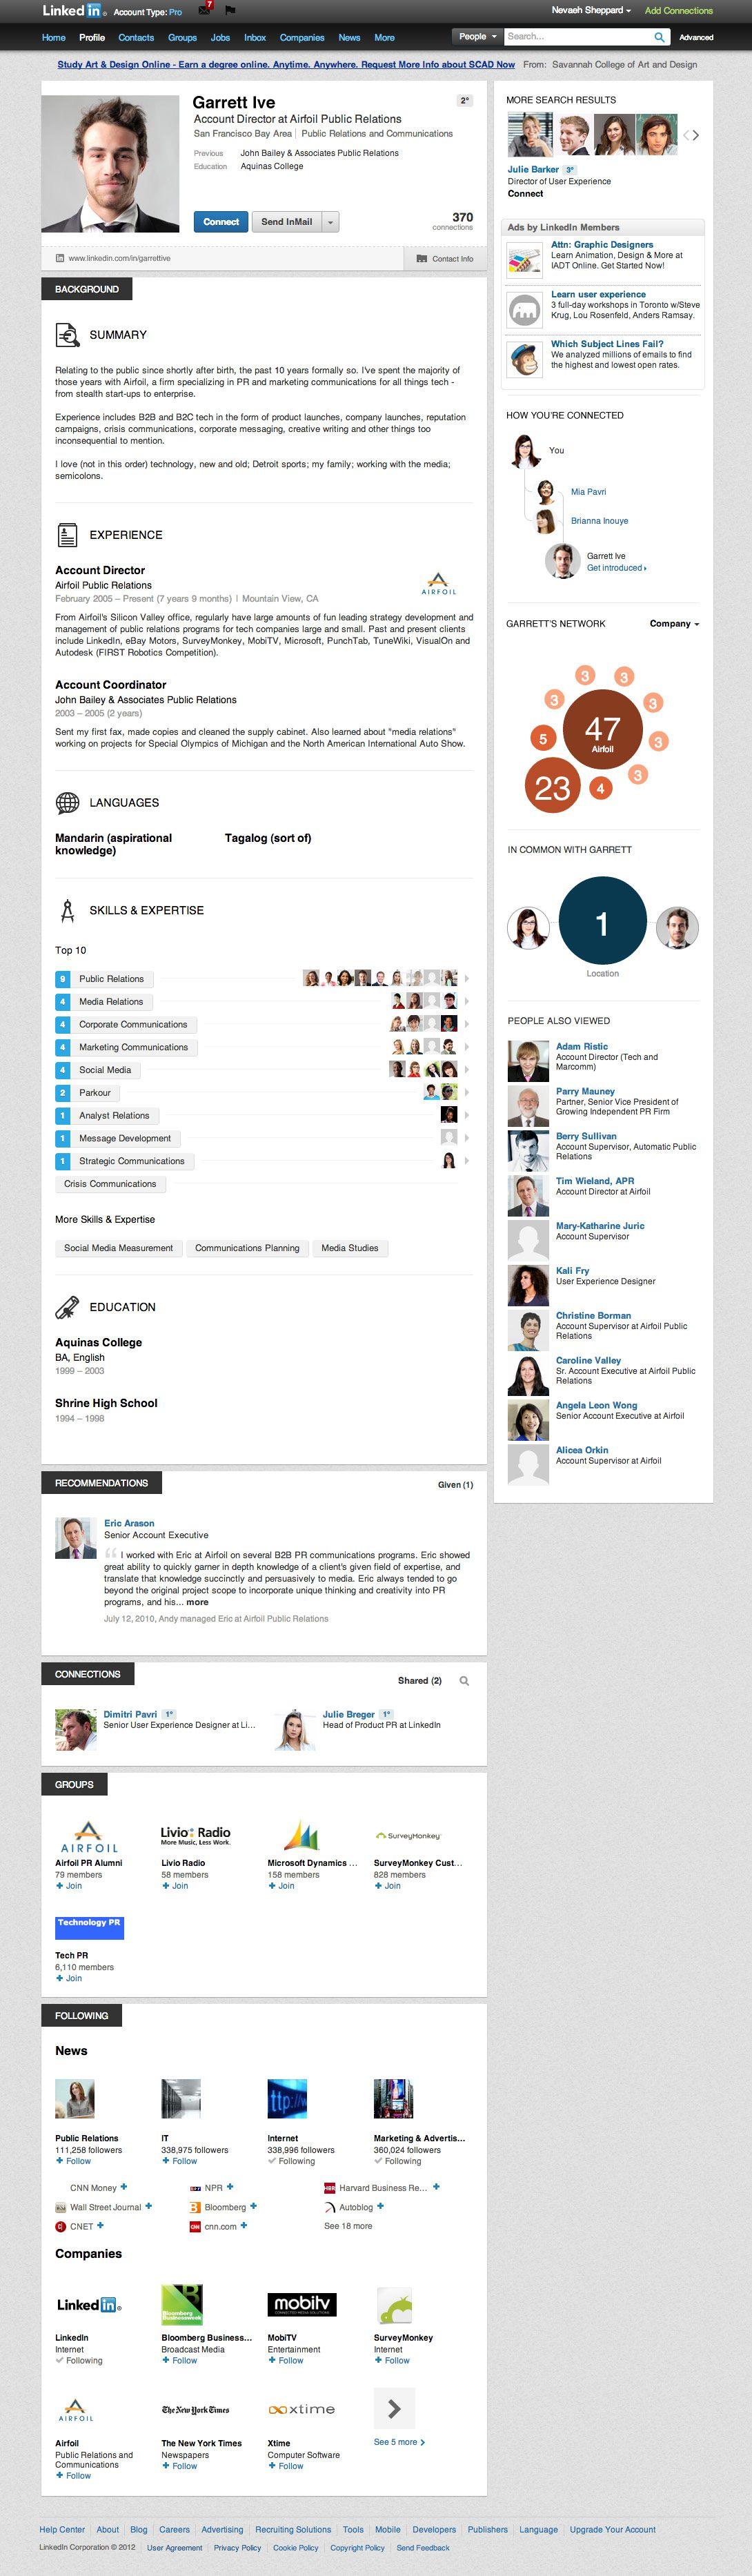 LinkedIn Cute Logo - Meet the New LinkedIn Profile - HardwareZone.com.sg